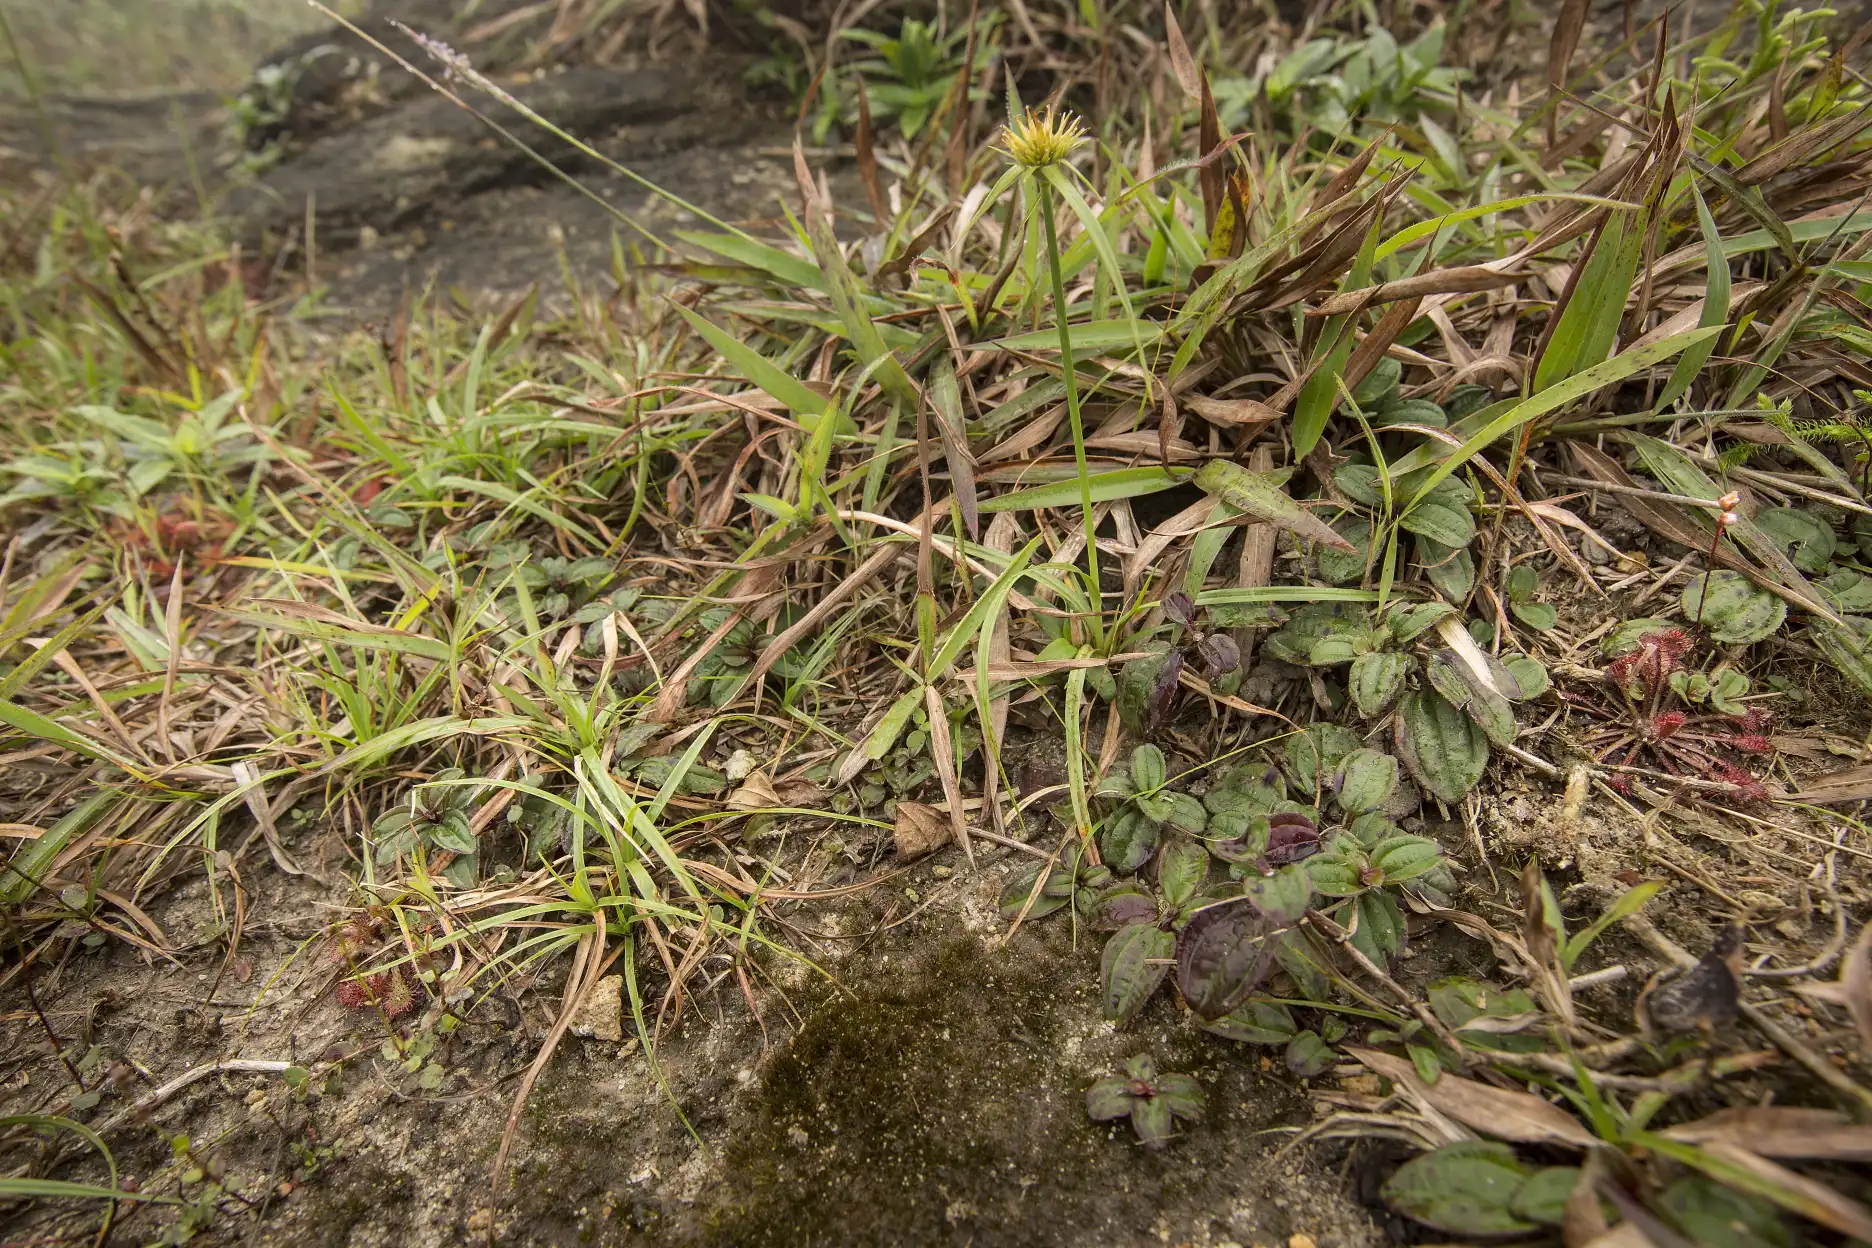 Drosera oblanceolata and D. spatulata-like plants